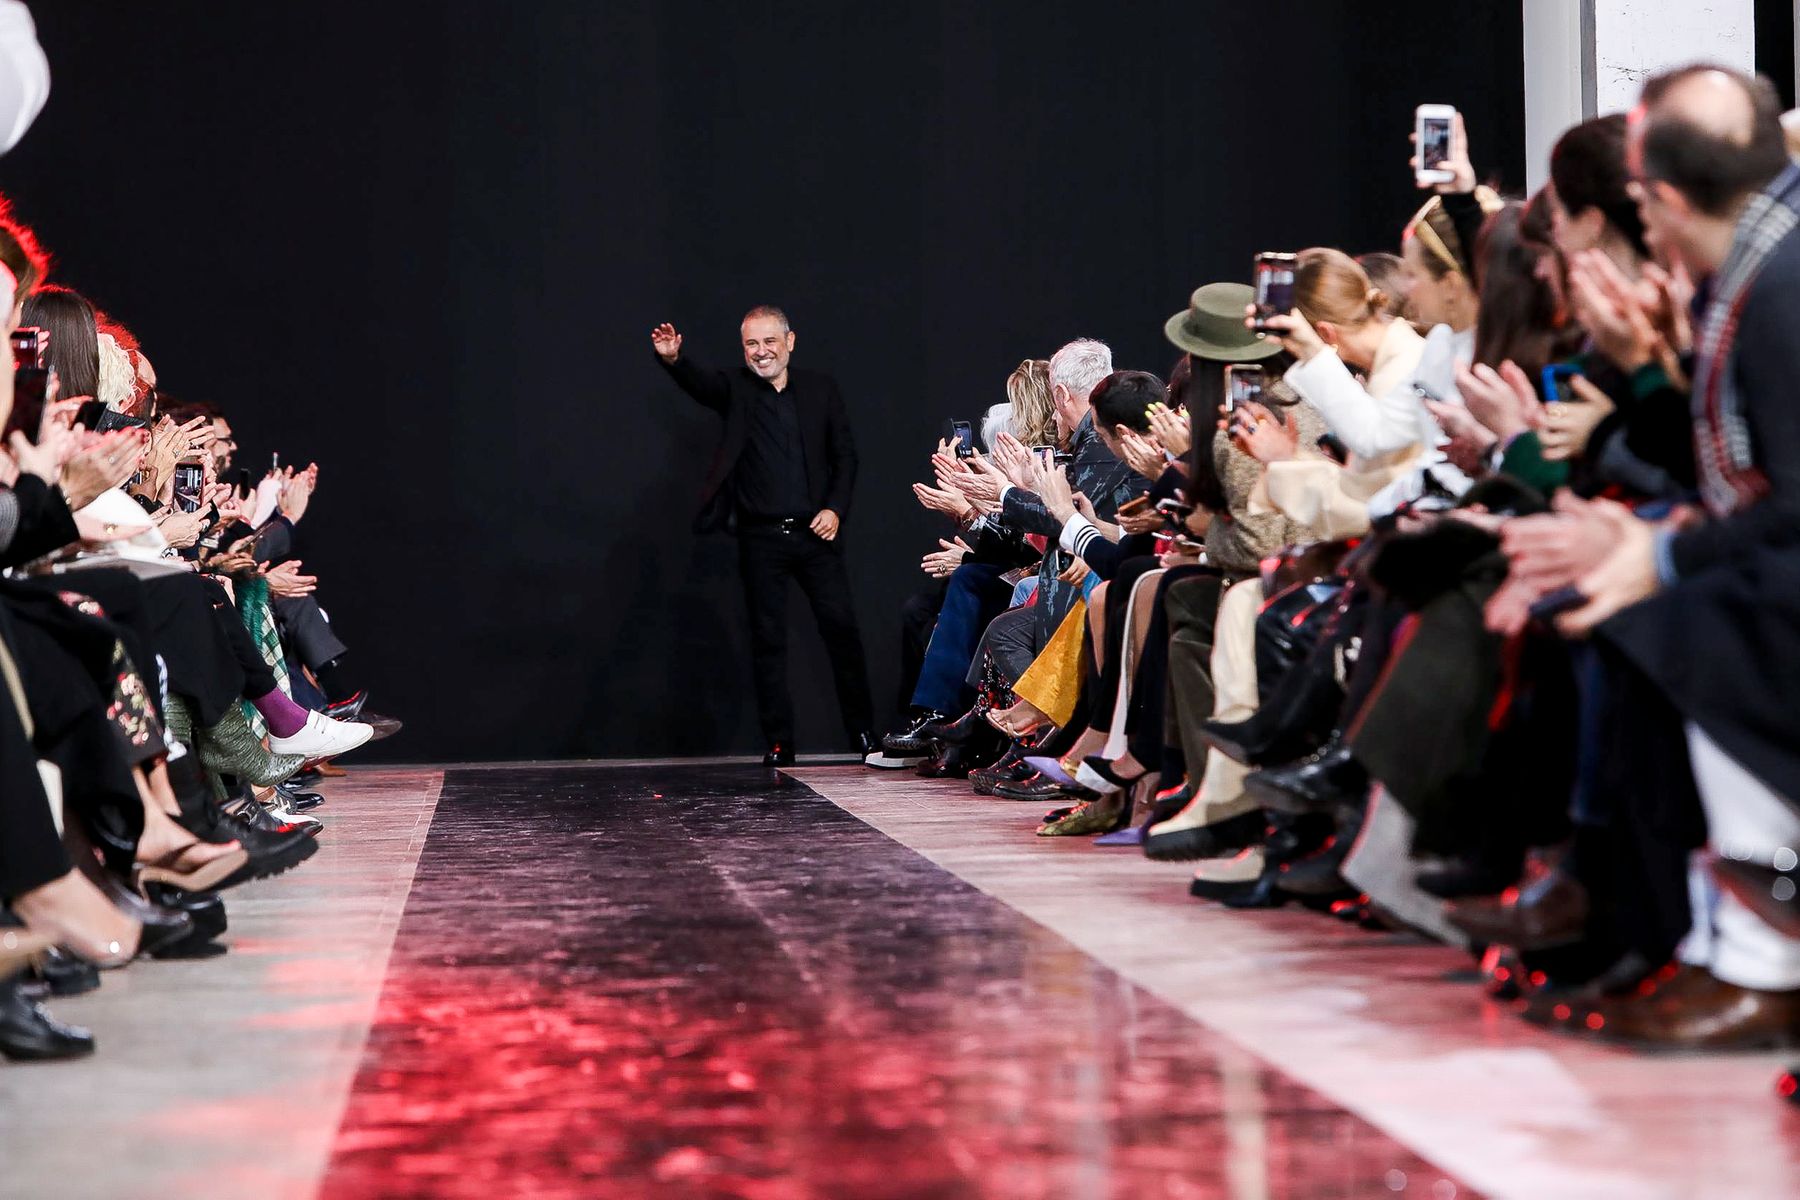 Elie Saab Fall Winter 2020-21 Fashion Show